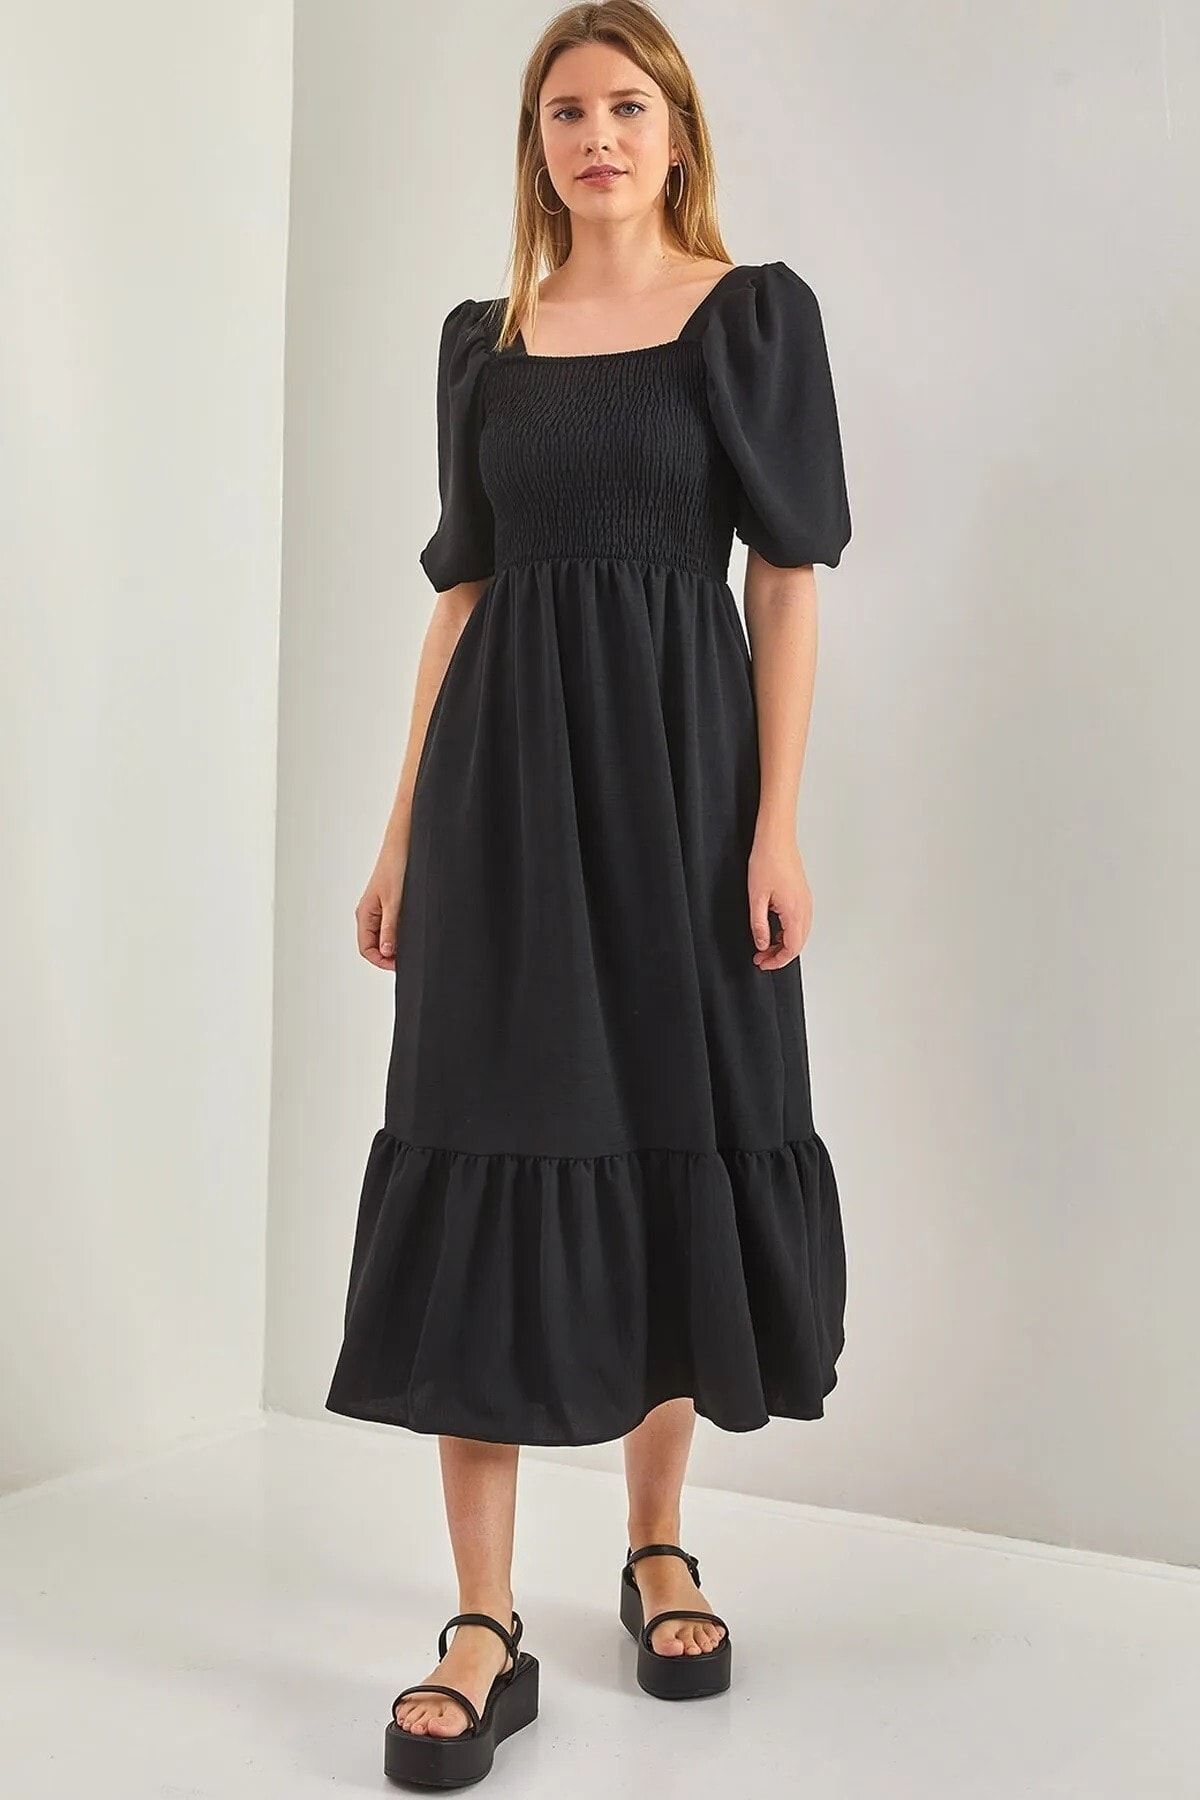 KaSheHa Siyah Bürümcük Kumaş Gipeli Prenses Kol Bodrum Elbise 115 Cm